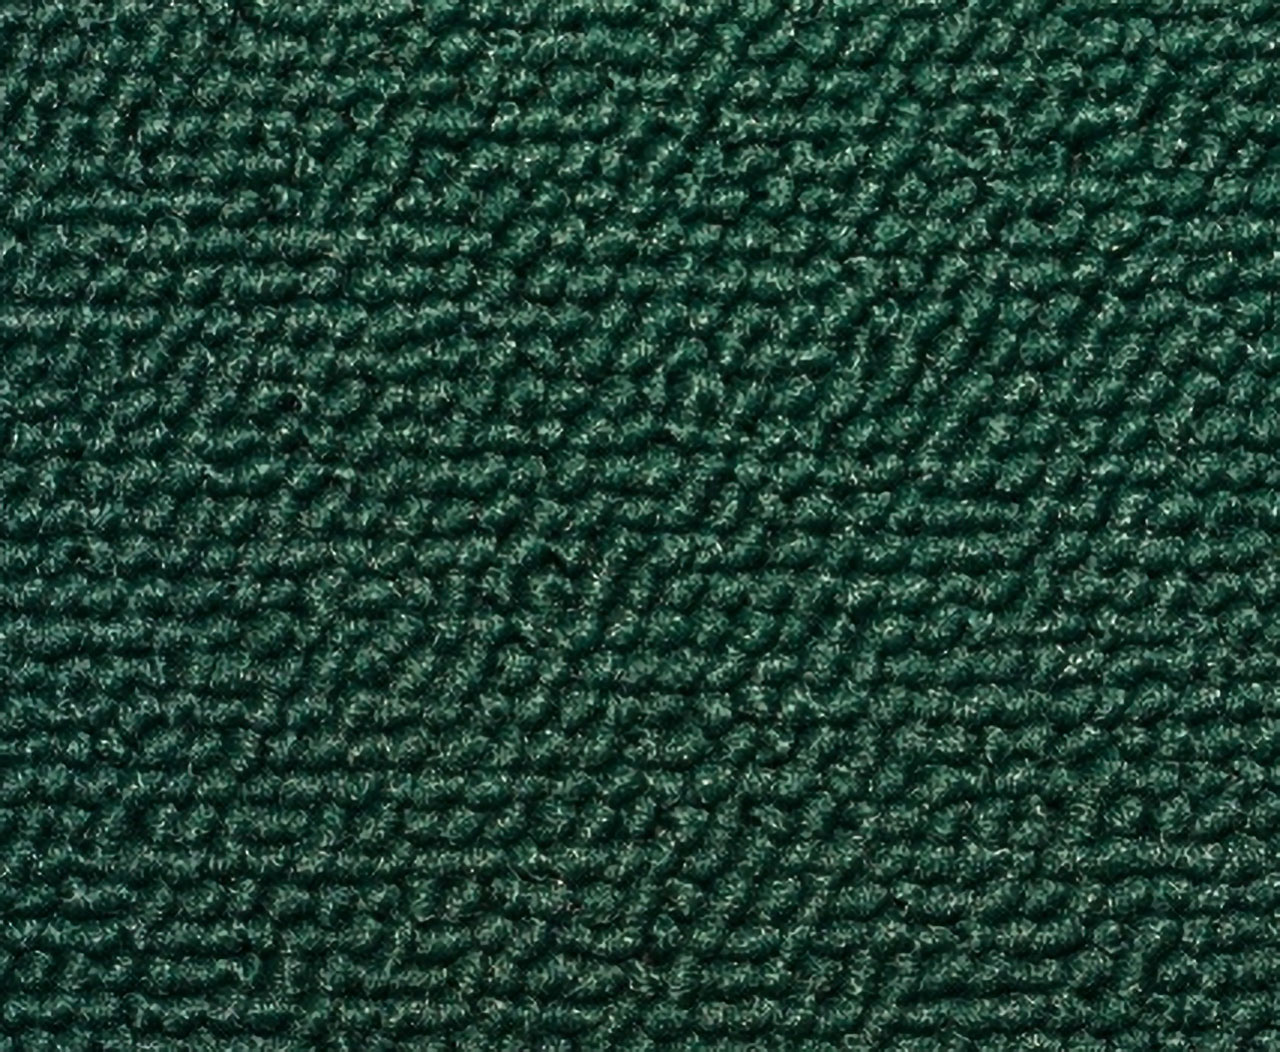 Holden Standard EJ Standard Ute B70 Triton Green Carpet (Image 1 of 1)